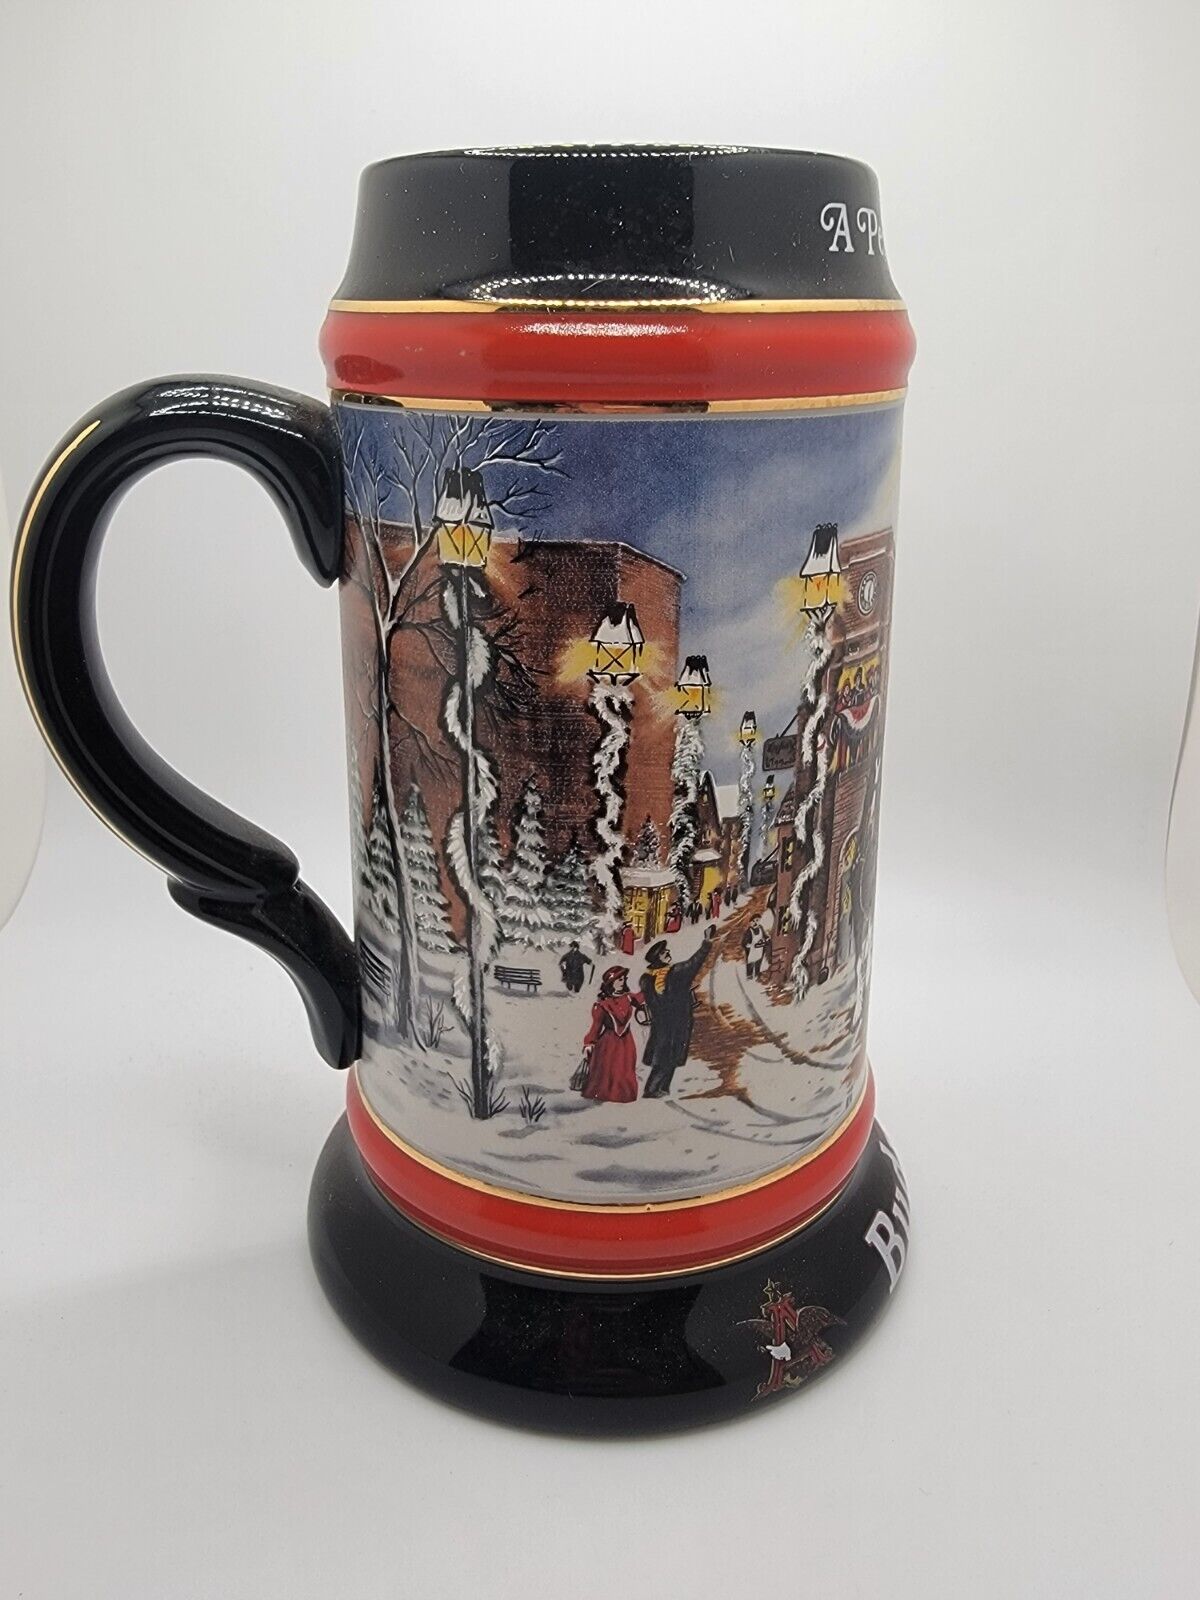 Anheuser Busch BUDWEISER 1992 Clydesdales Collector's Series Beer Stein Mug